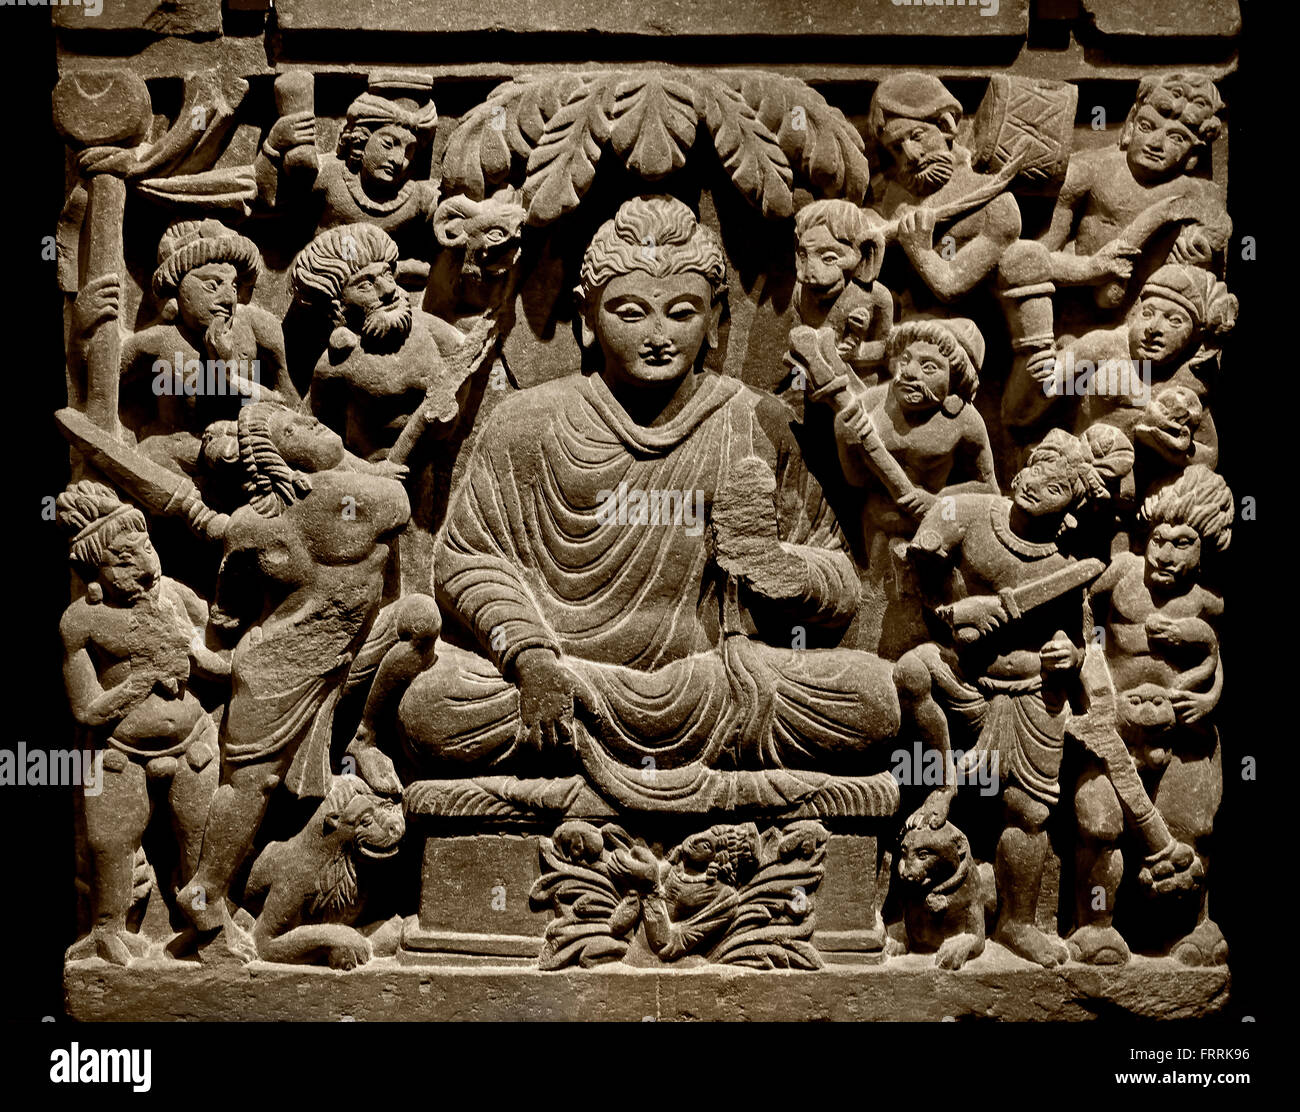 Victory on Mara in Bodhgaya  2 - 3 th Century  Northwestern Pakistan, Schist, Gandhara ( Seated beneath the Bodhi tree he defeats eval and becomes ' awakened ' he is now the Buddha ) Stock Photo